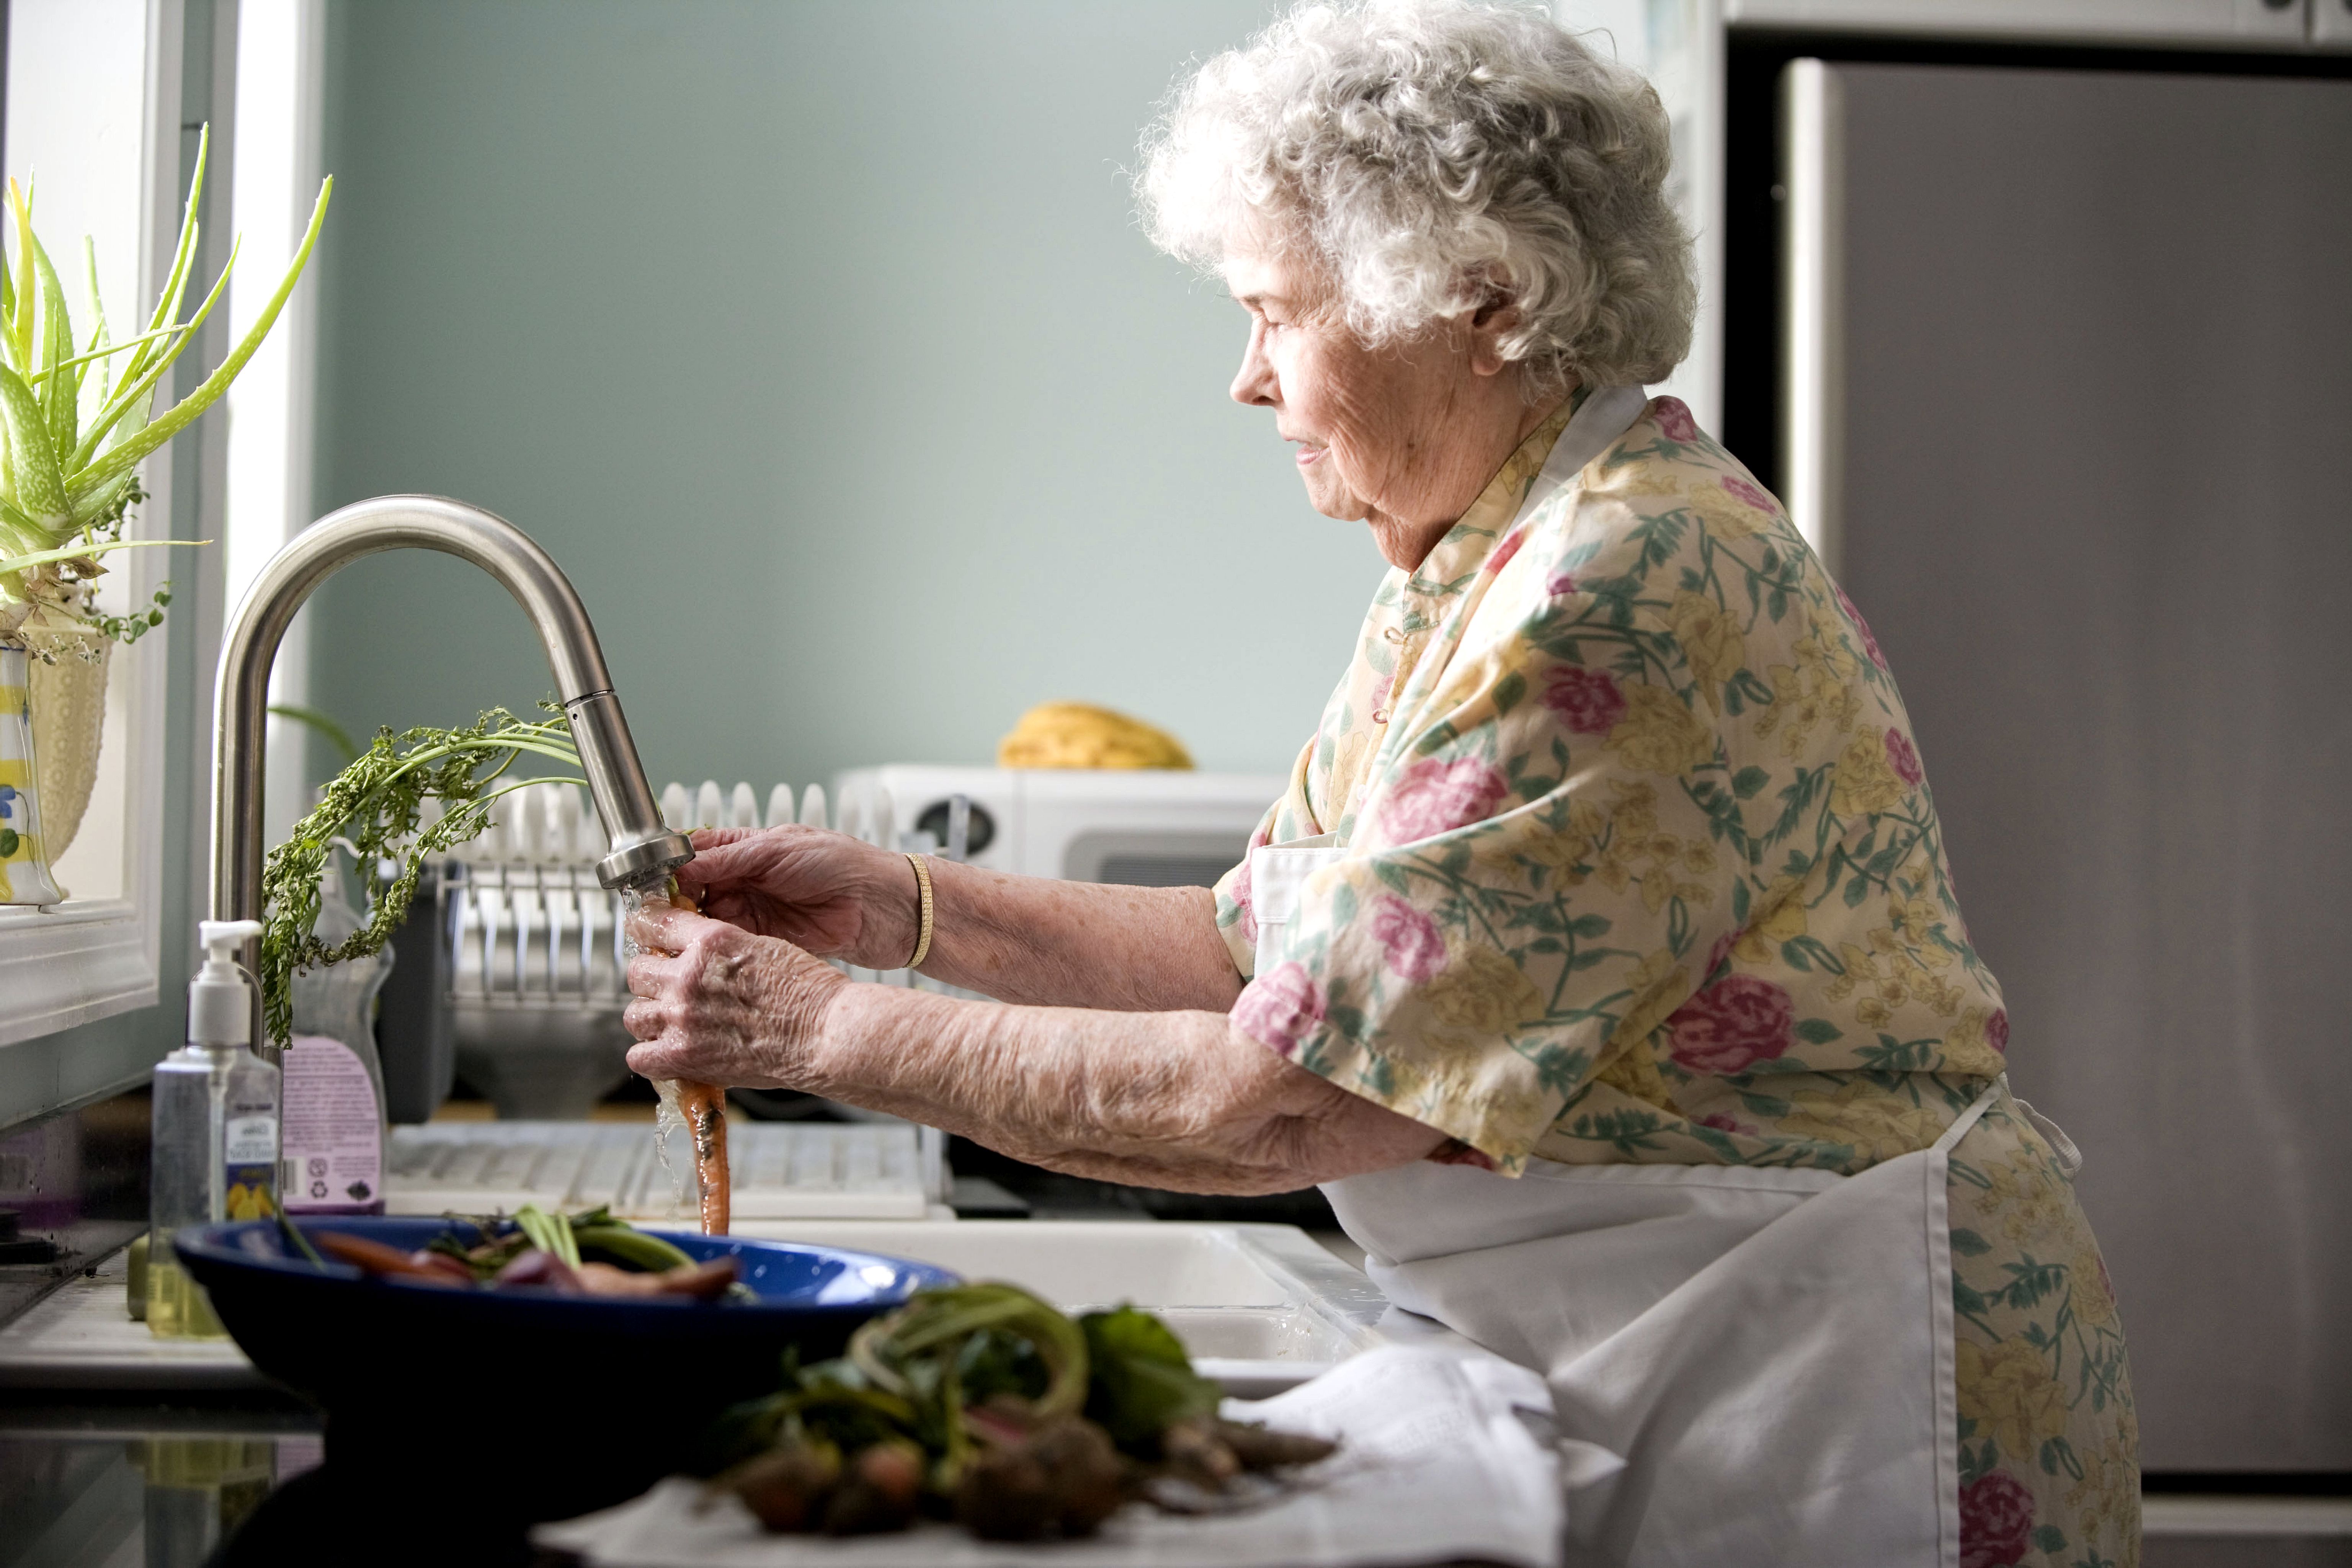 https://pixnio.com/free-images/people/female-women/elderly-woman-in-kitchen-in-process-of-food-preparation.jpg